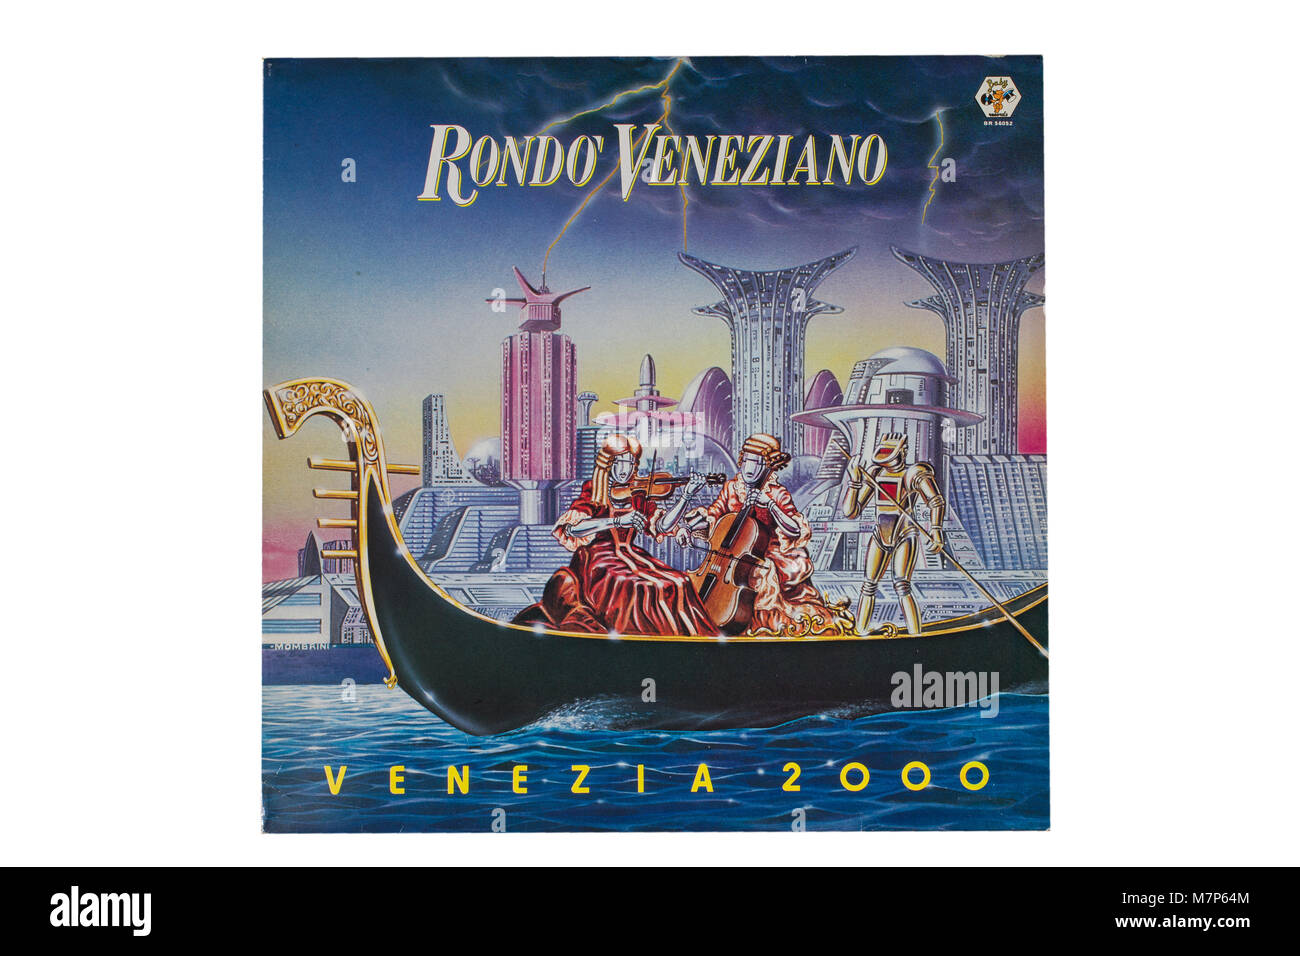 Rondò Veneziano Venezia 2000 (1983), Original LP Stockfoto